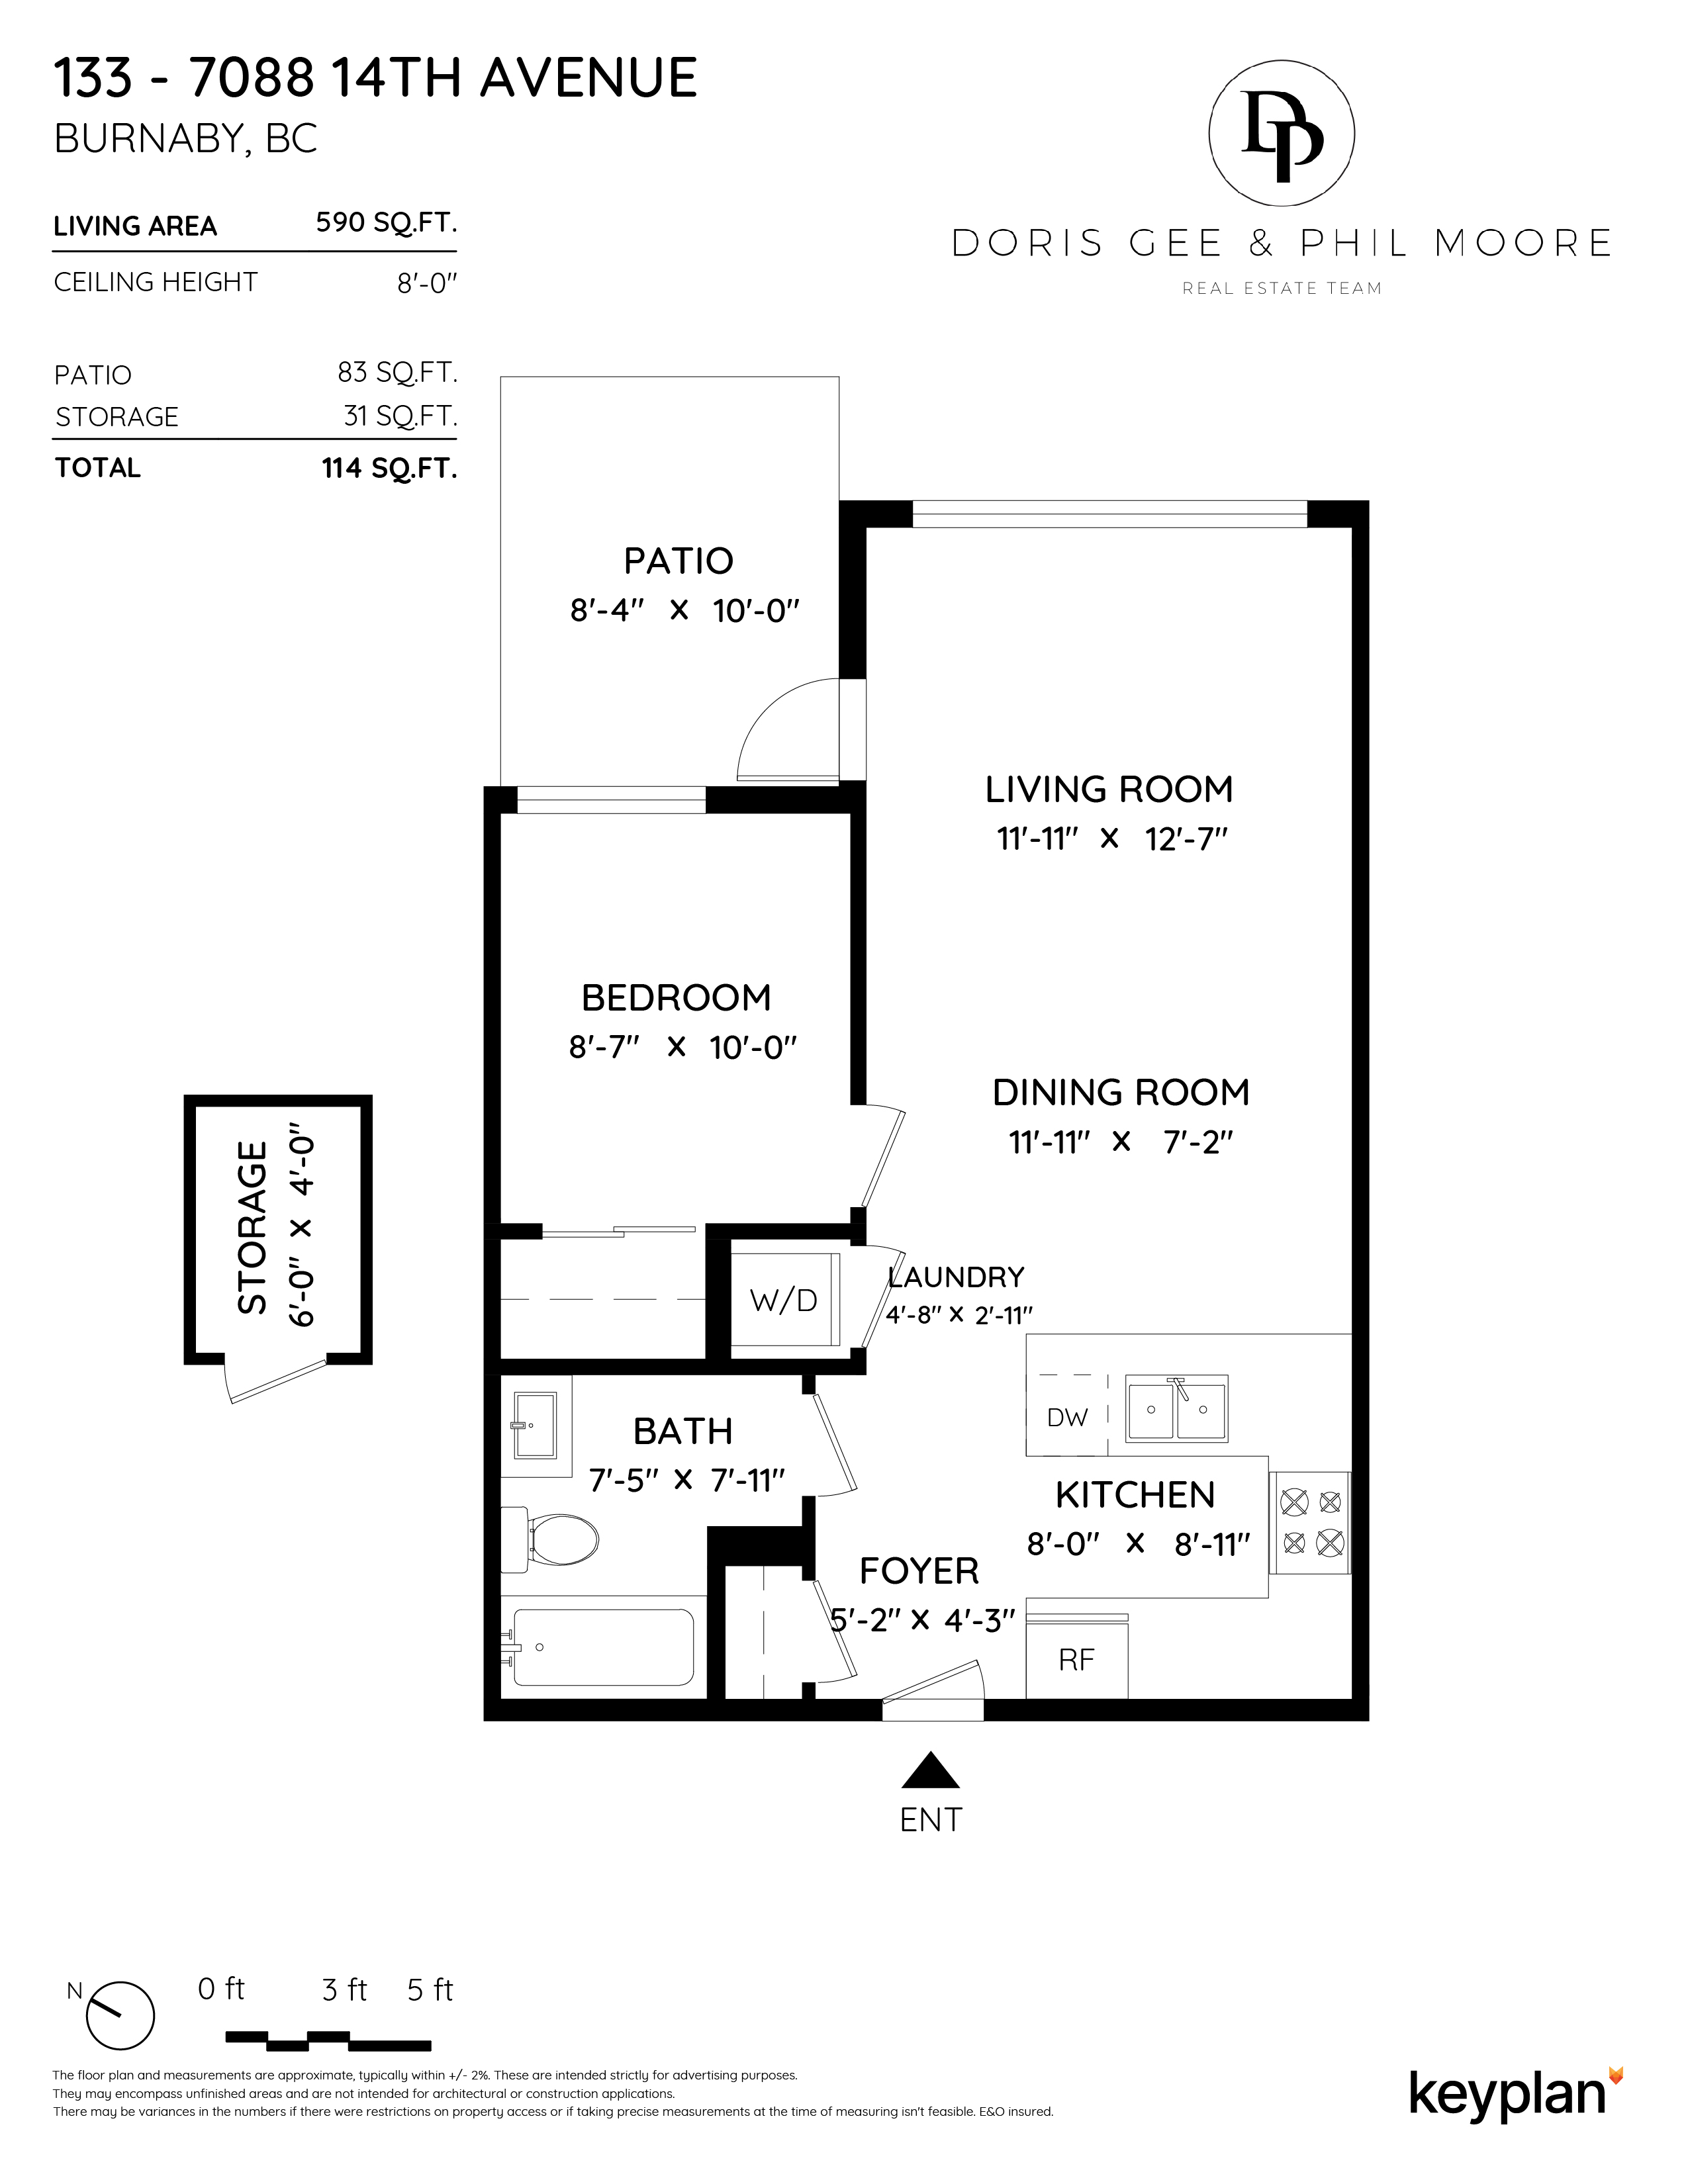 Doris Gee & Phil Moore - Unit 133 - 7088 14th Avenue, Burnaby, BC, Canada | Floor Plan 1